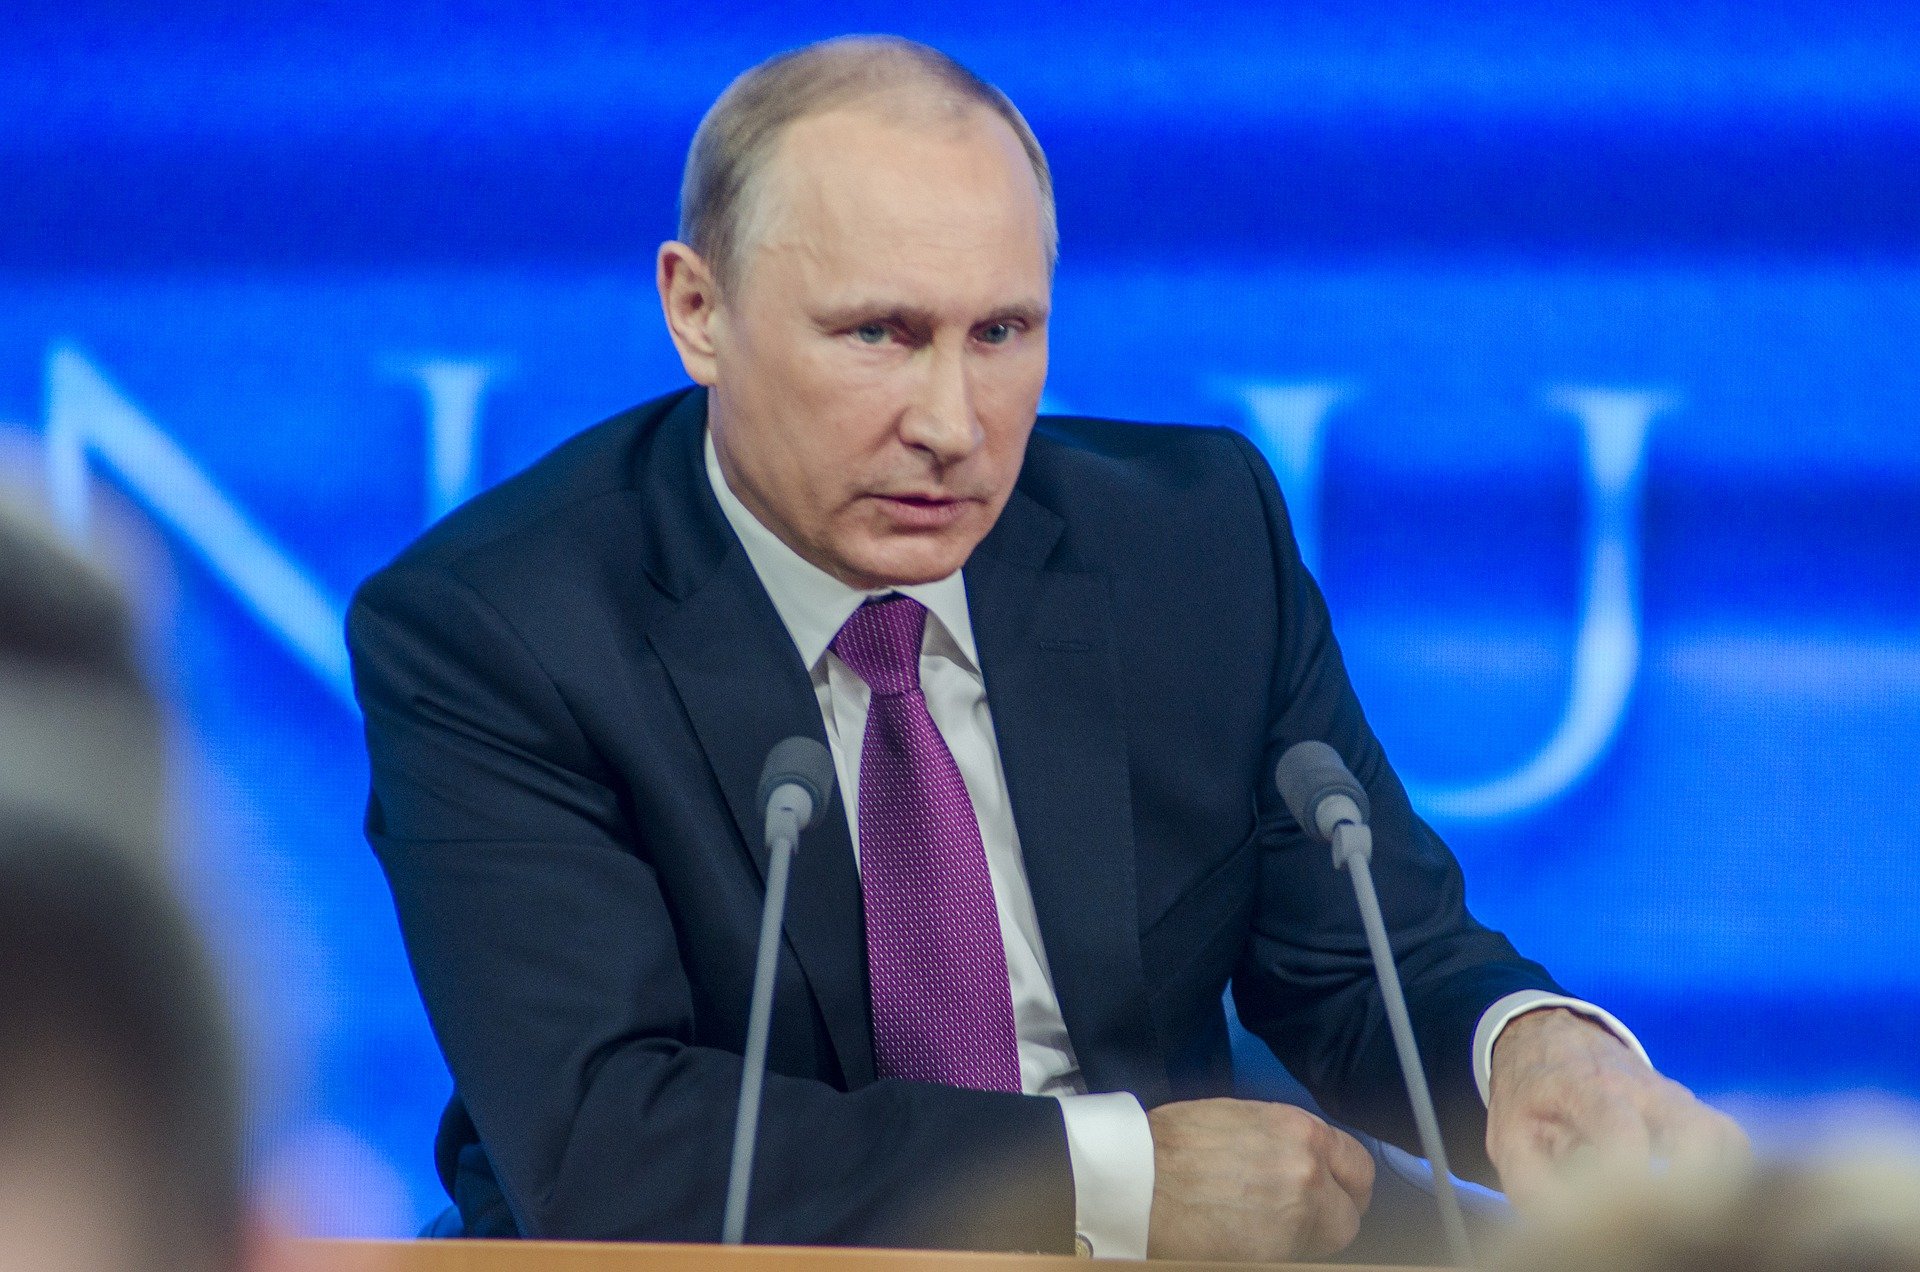 [The president of Russia, Vladimir Putin, Photo credit to pixabay]